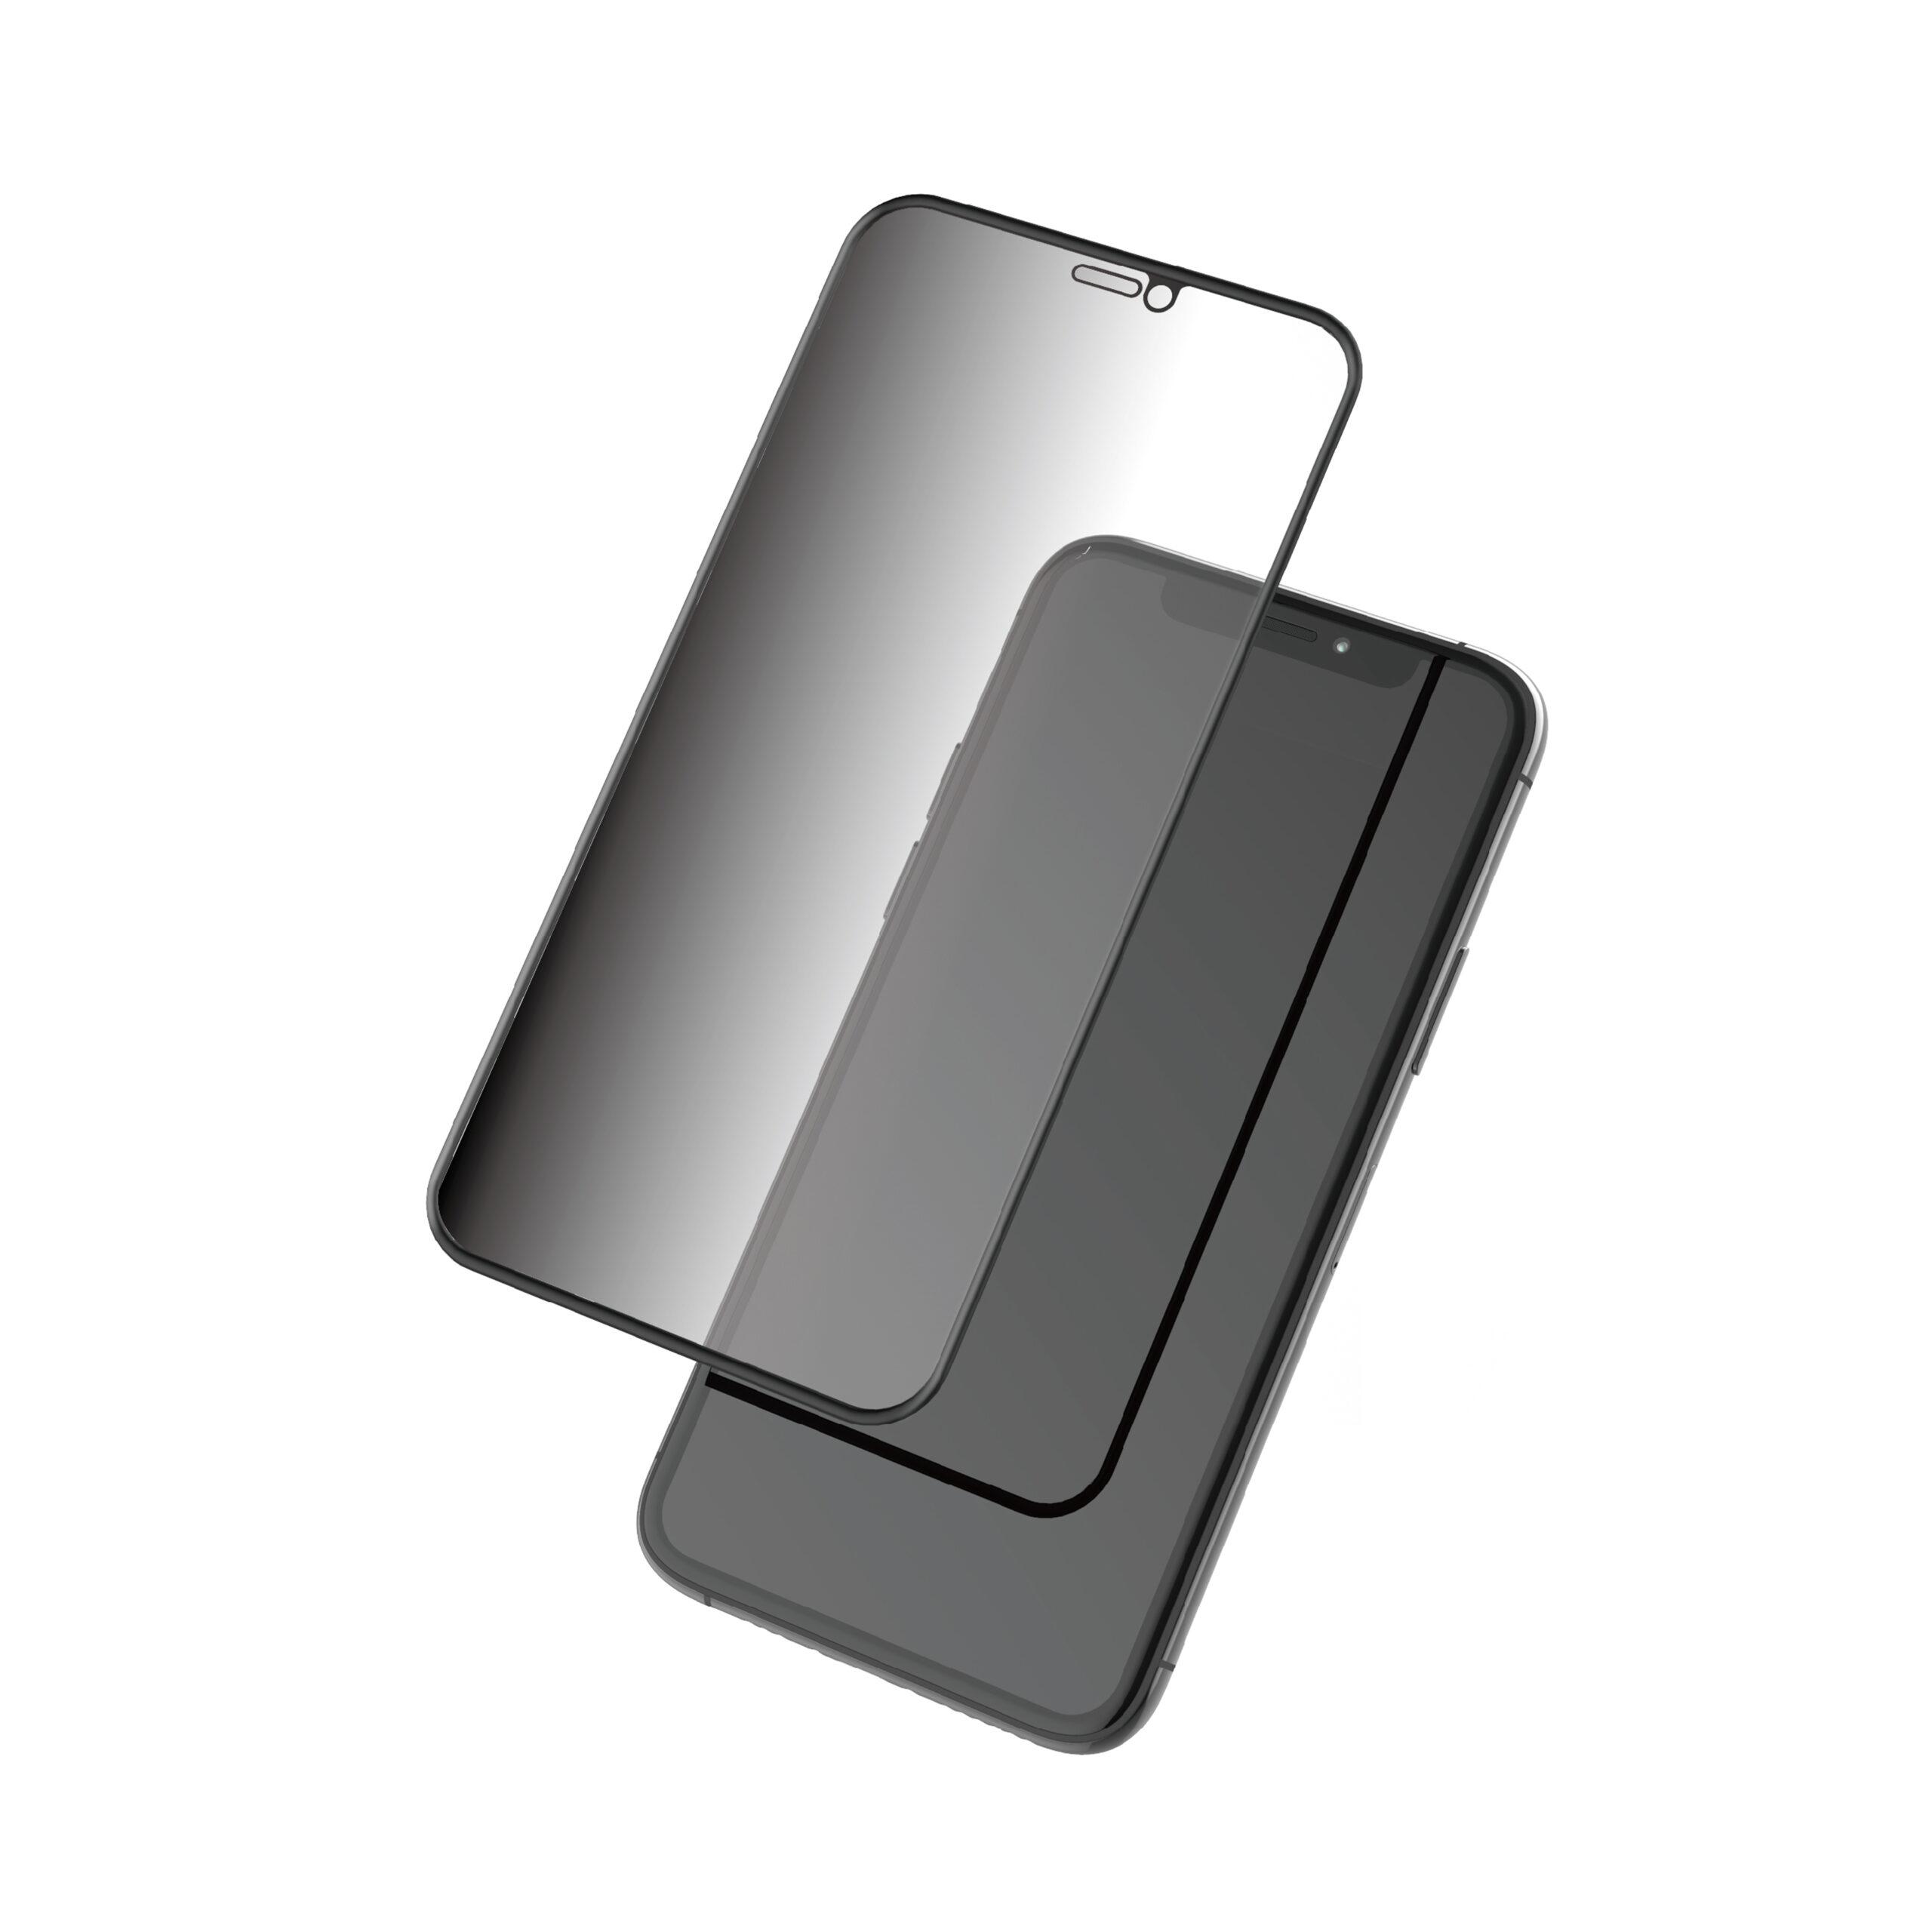 شاشة حماية للخصوصية اسود 3D Silicone Privacy Glass Screen Protector for iPhone 12 من Green